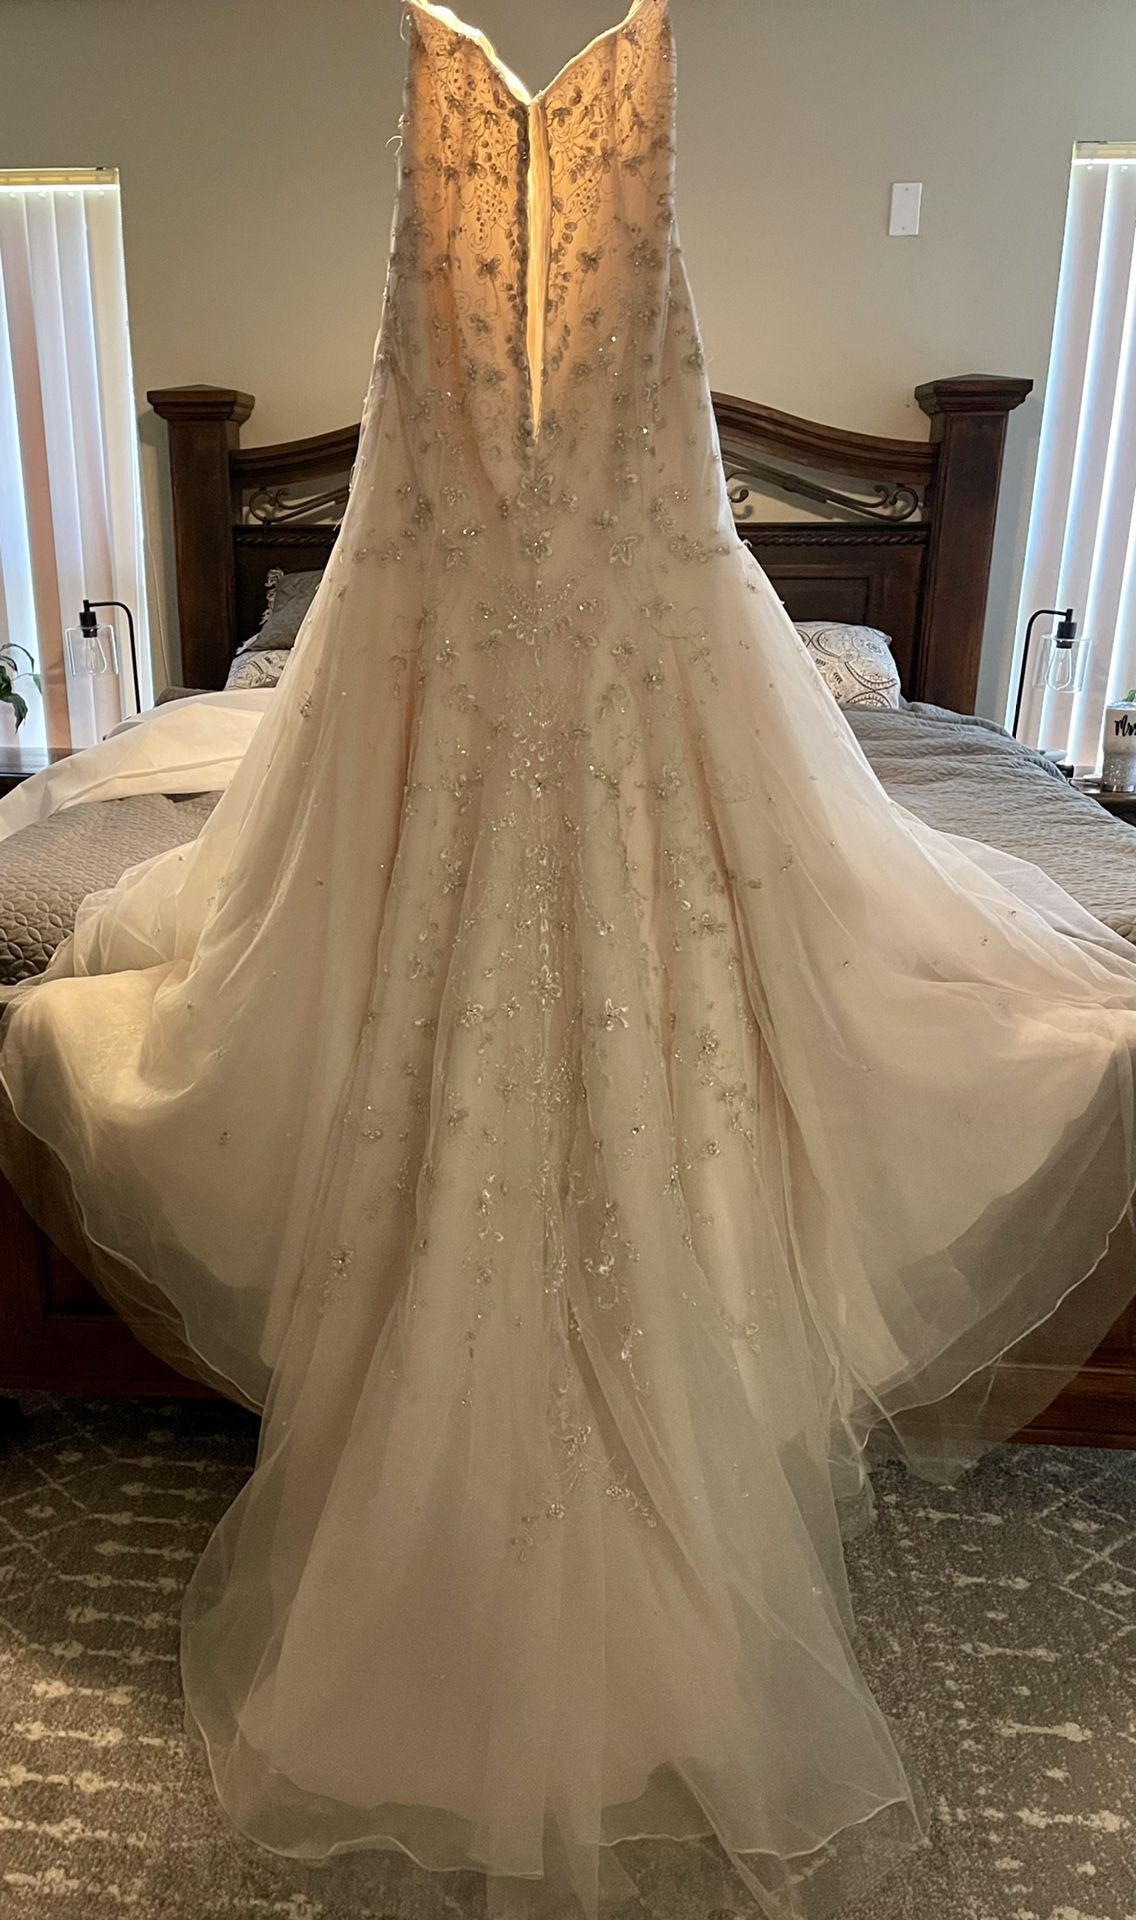 Martina Liana Wedding Dress